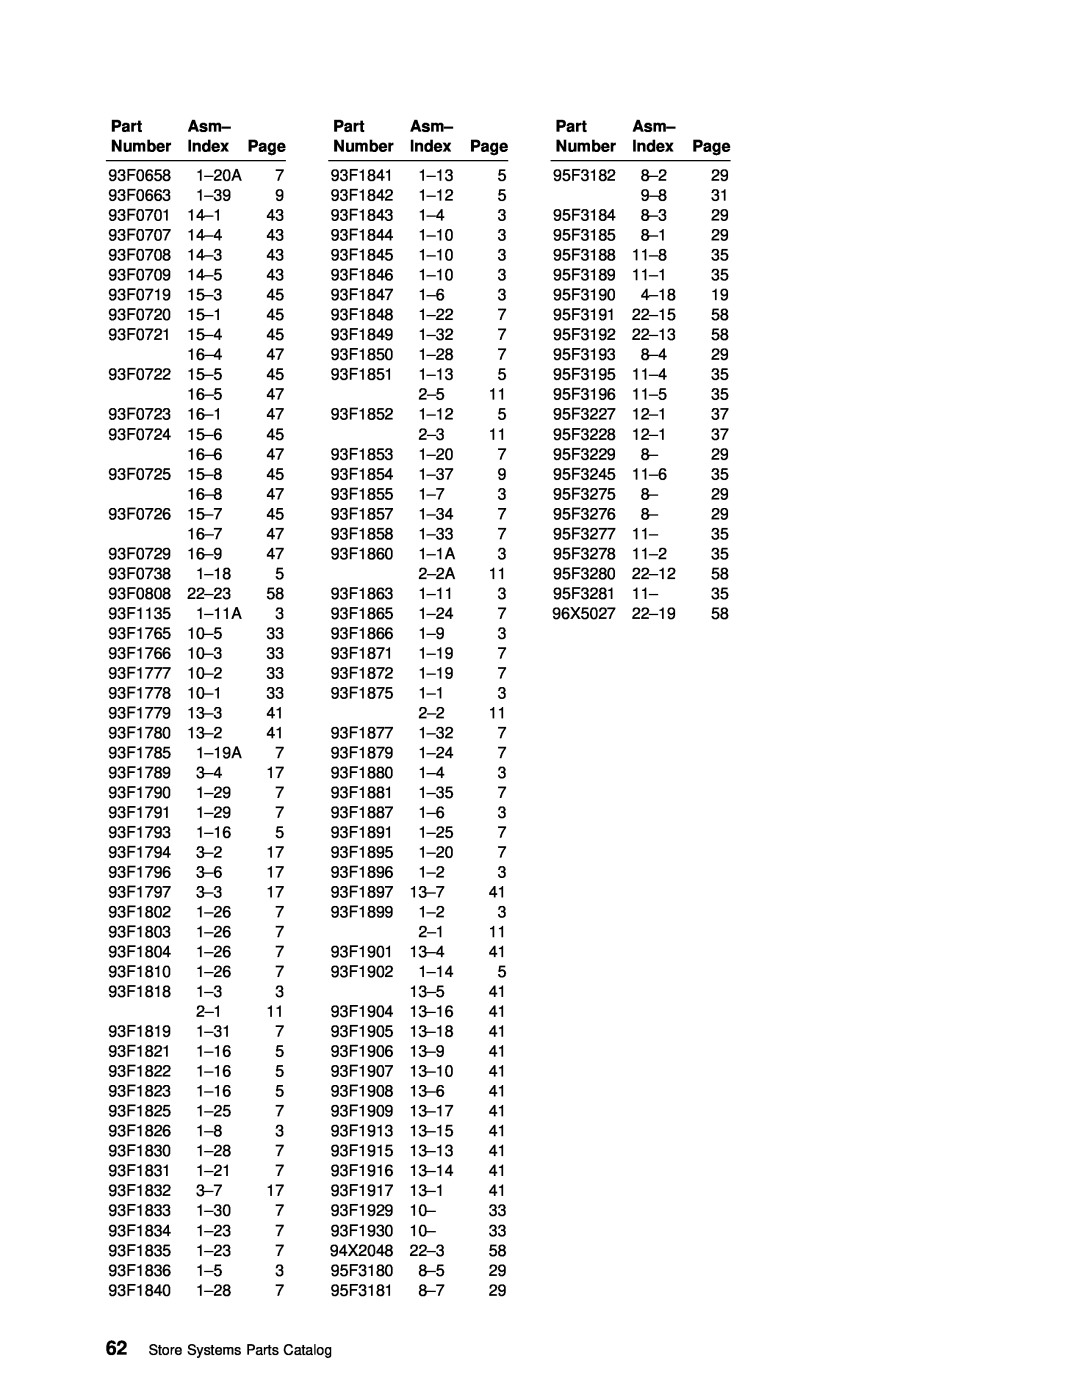 IBM 4693 DBCS FAMILY, 4694 DBCS FAMILY manual Part, Number Index Page, 93F0658, 93F0707, 93F0708, 93F0709, 93F0808 